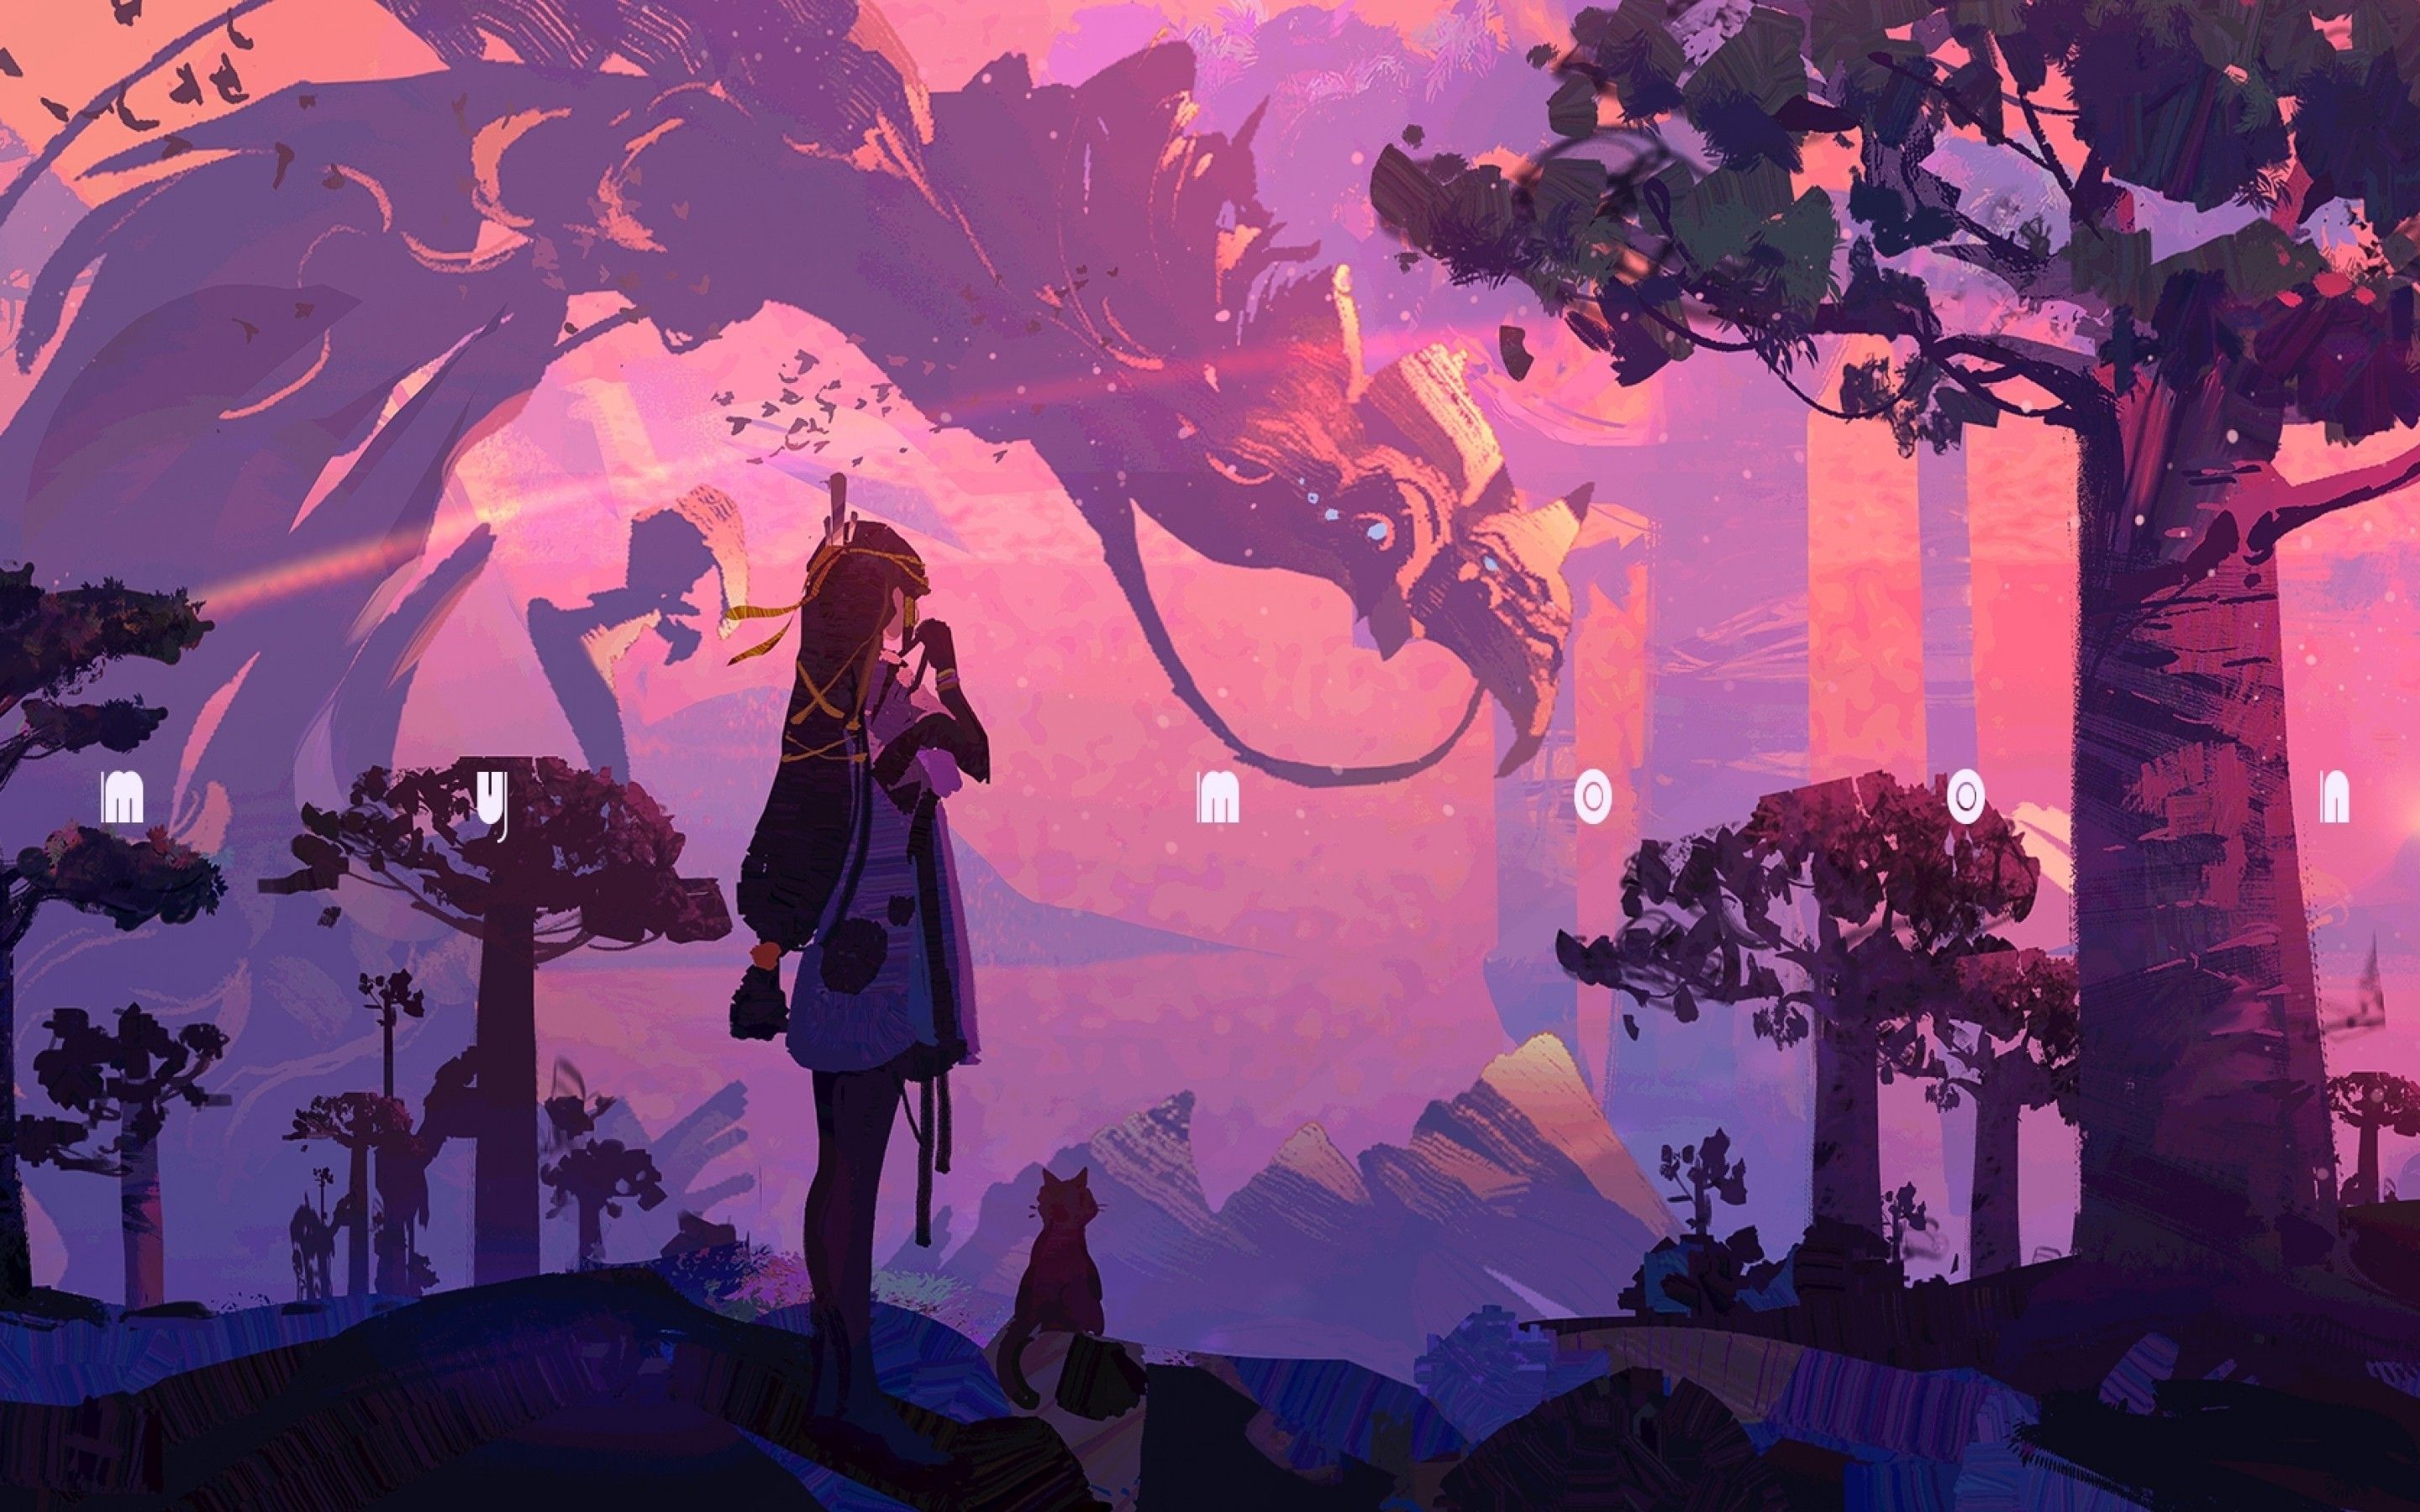 Download 2880x1800 Anime Landscape, Dragon, Girl, Trees, Scenic Wallpaper for MacBook Pro 15 inch